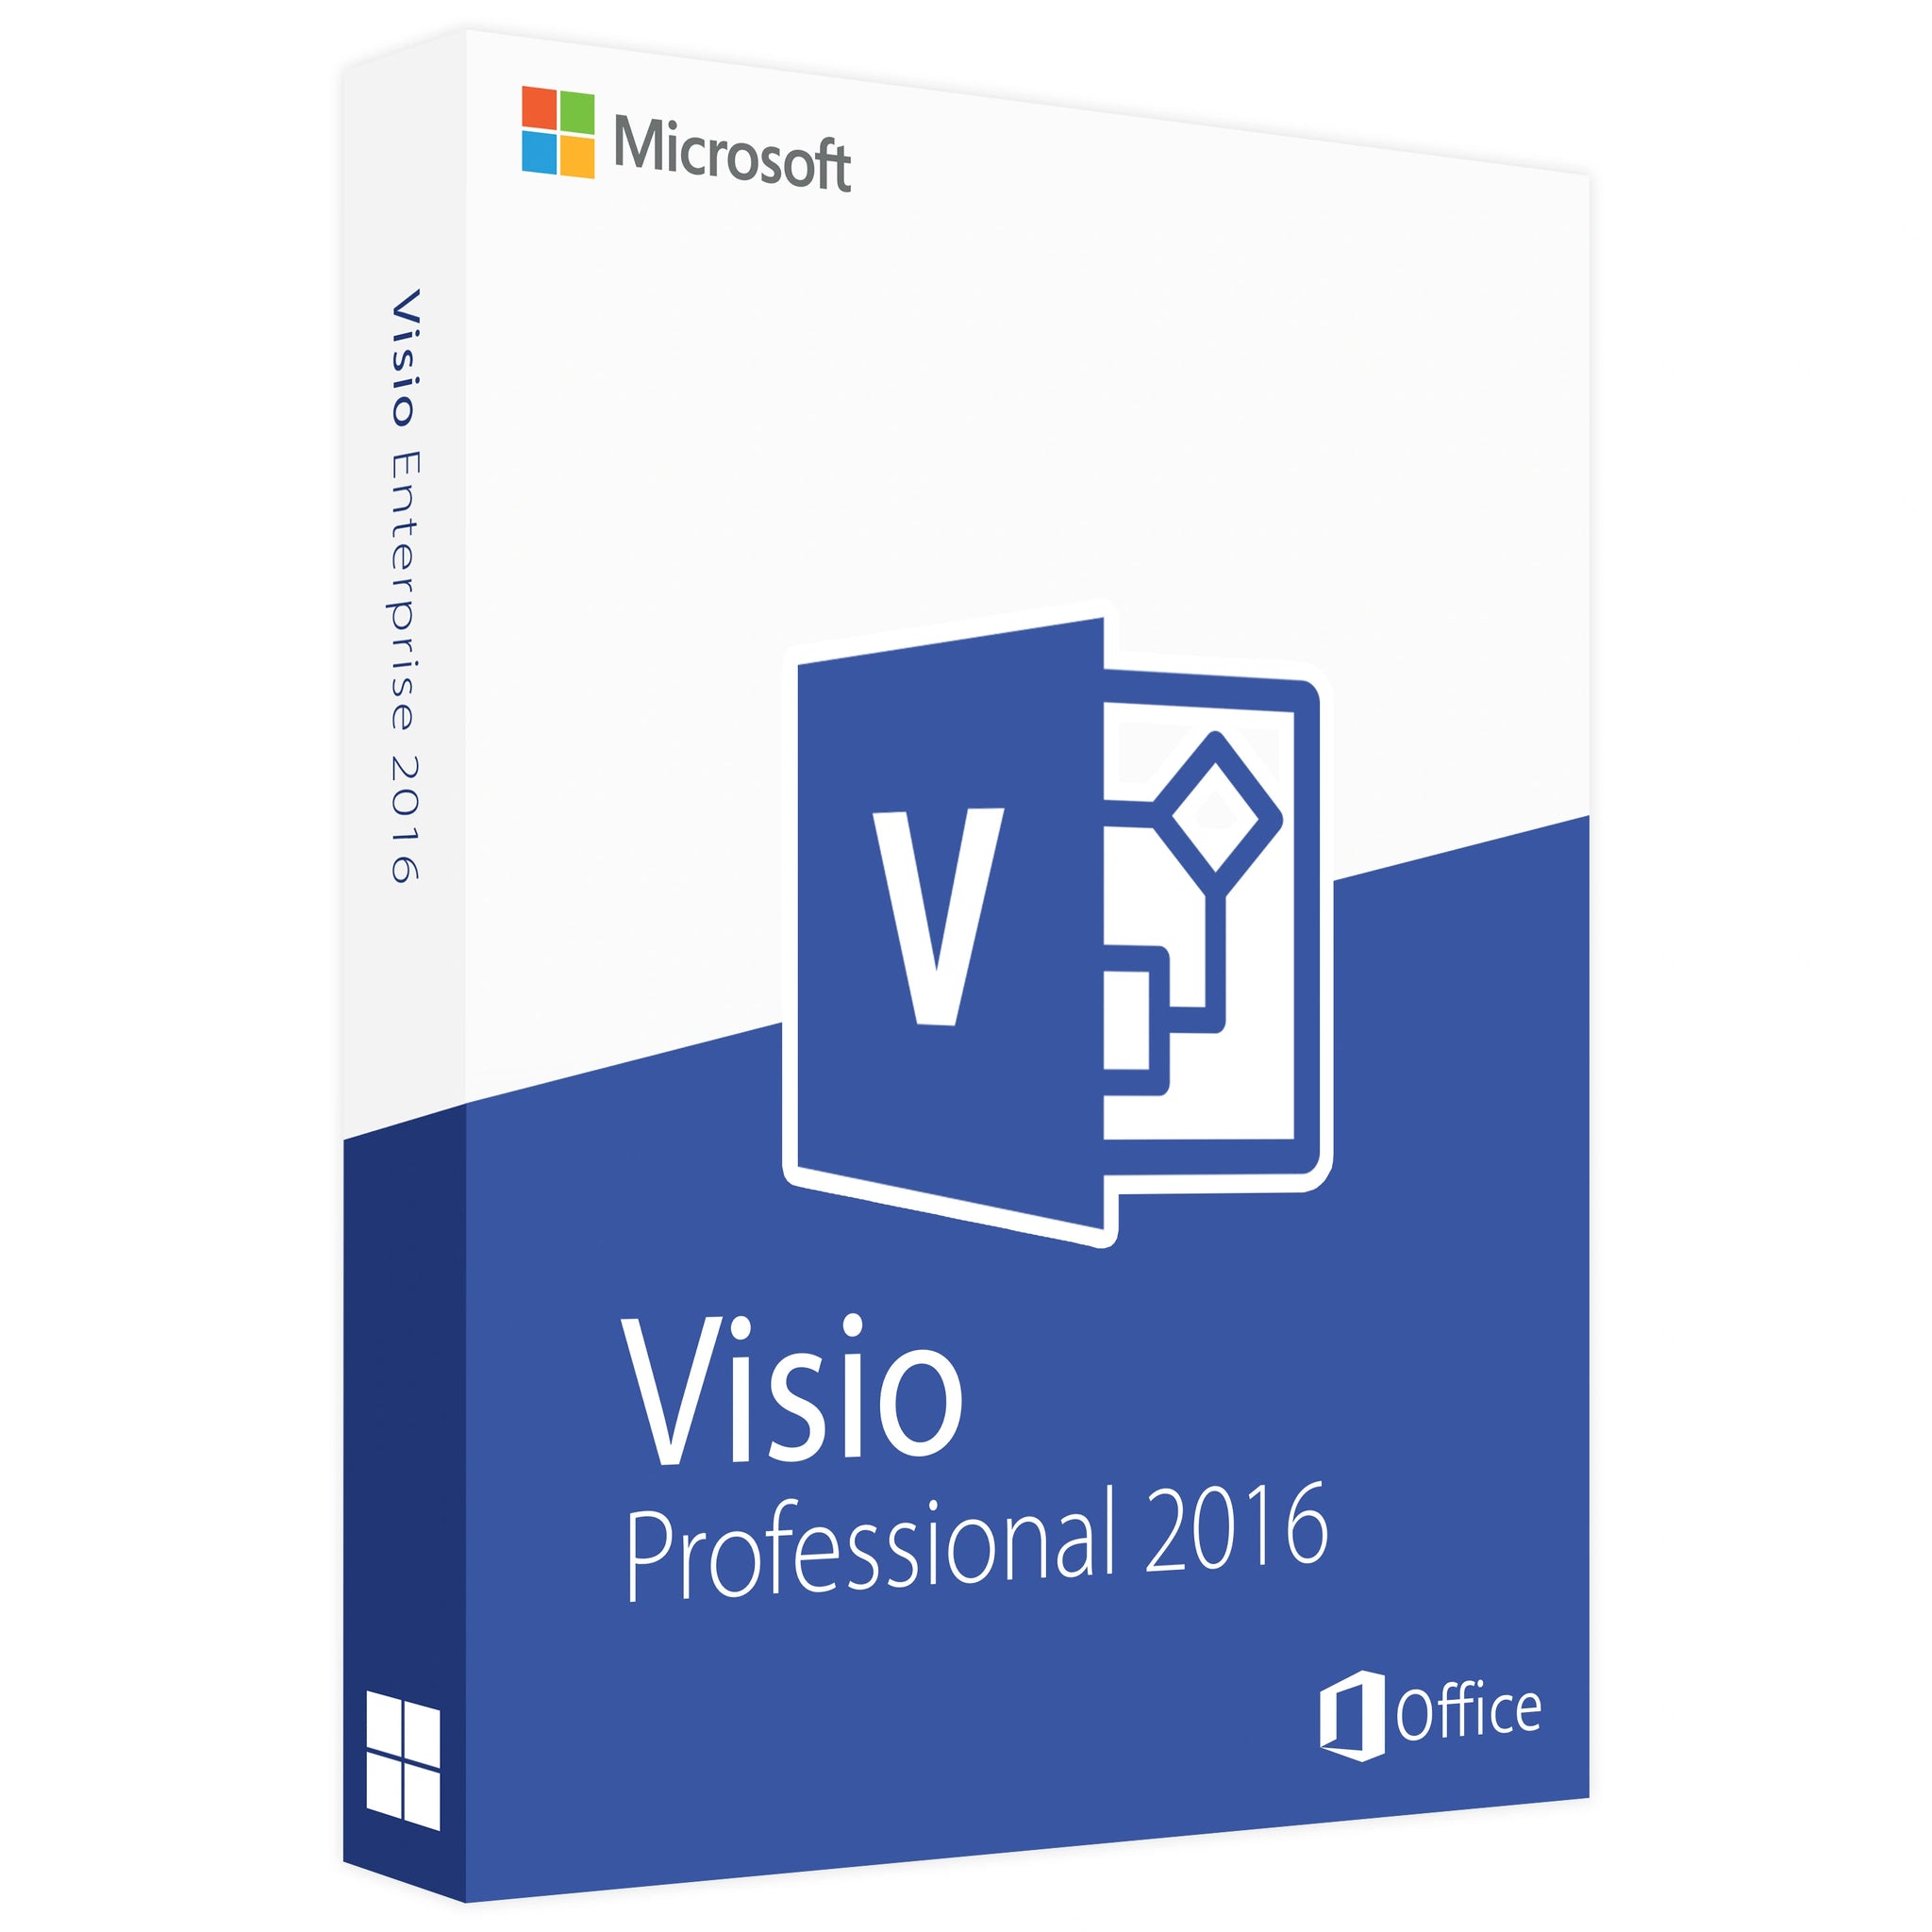 Microsoft Visio 2016 Professional- Lifetime License Key for 1 PC